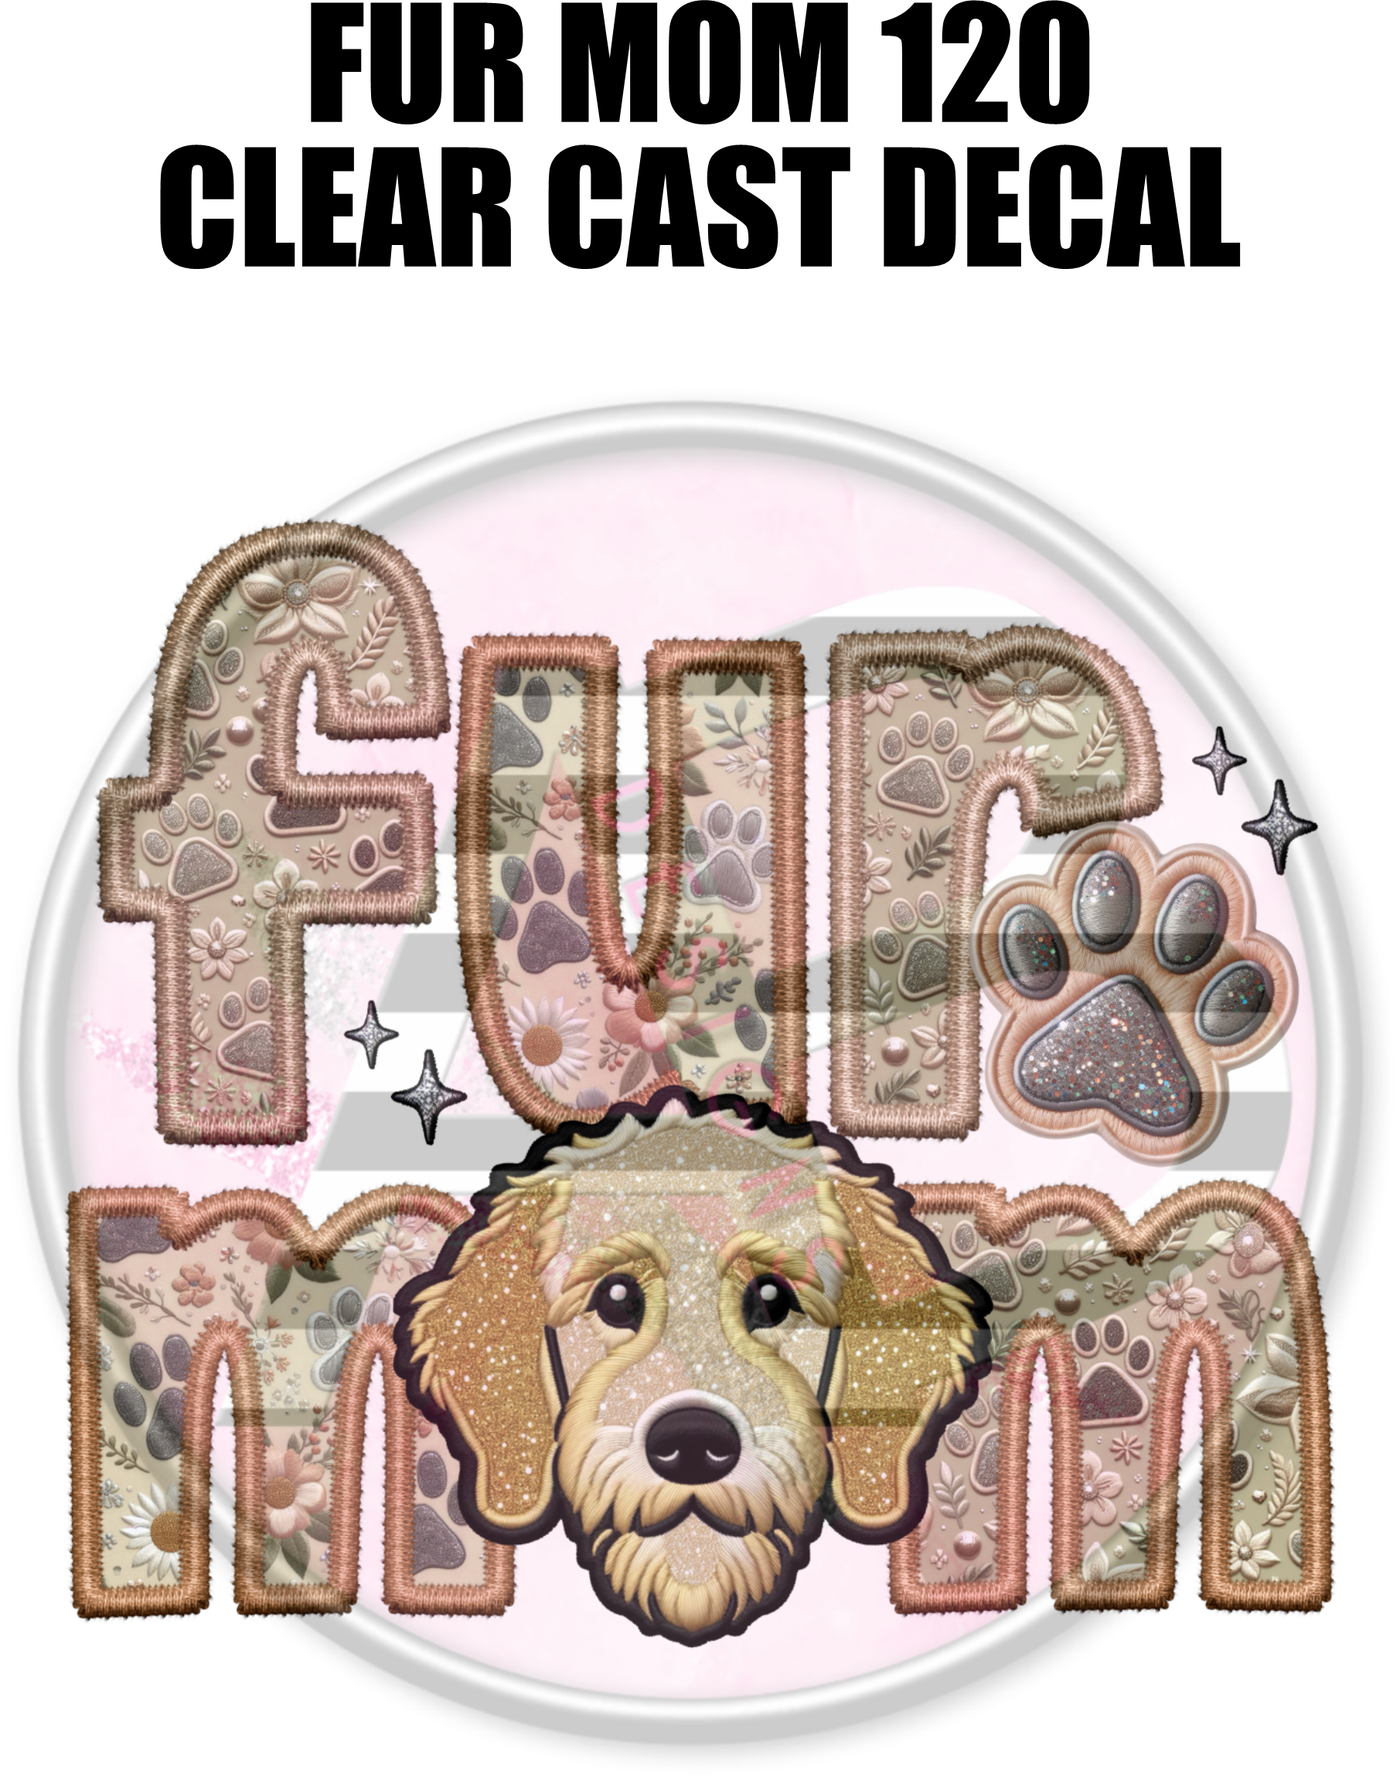 Fur Mom 120 - Clear Cast Decal